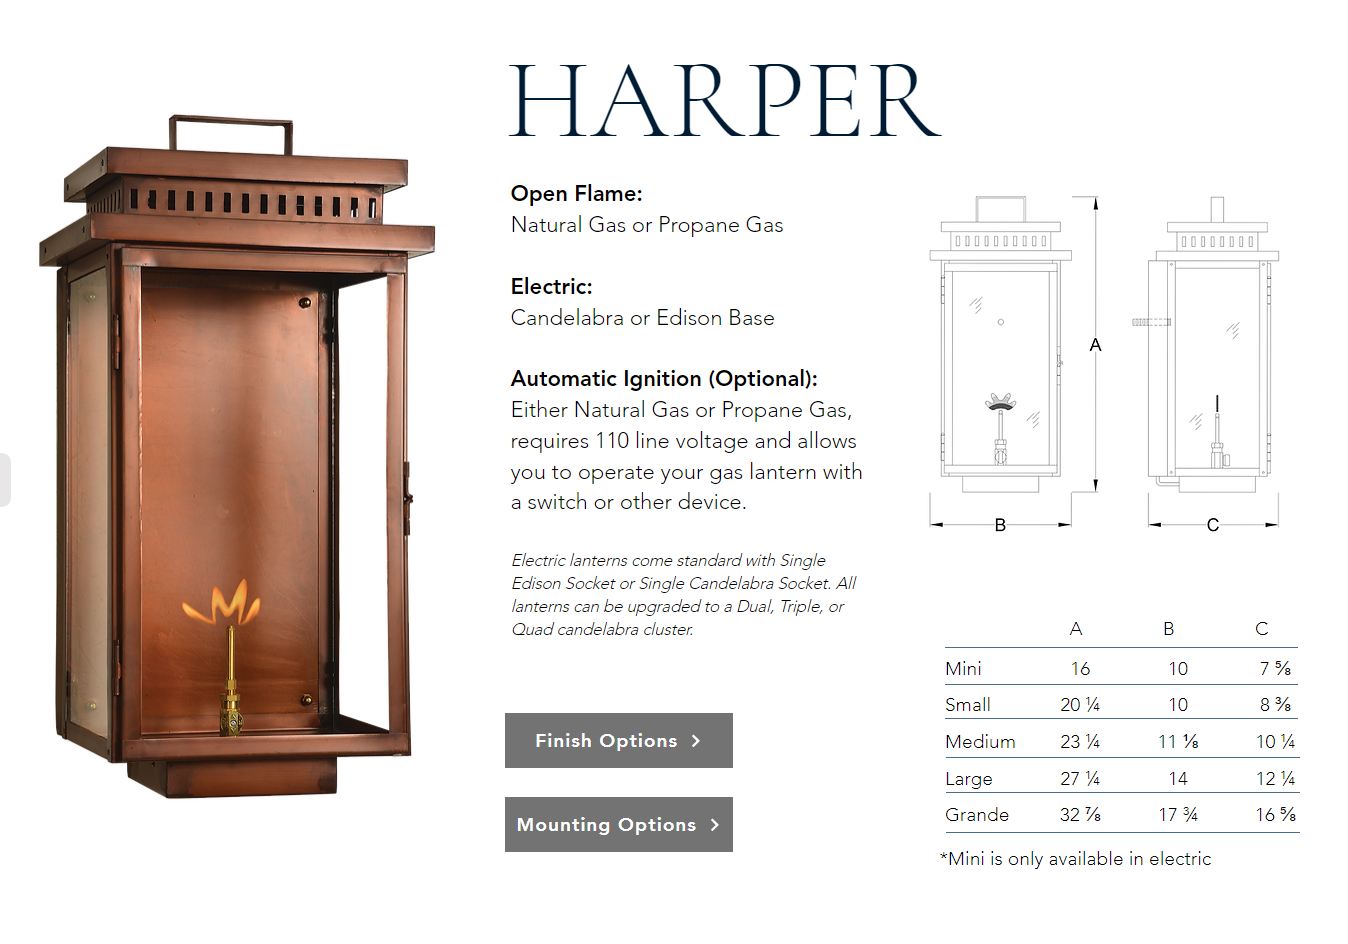 St. James Harper Copper Lantern